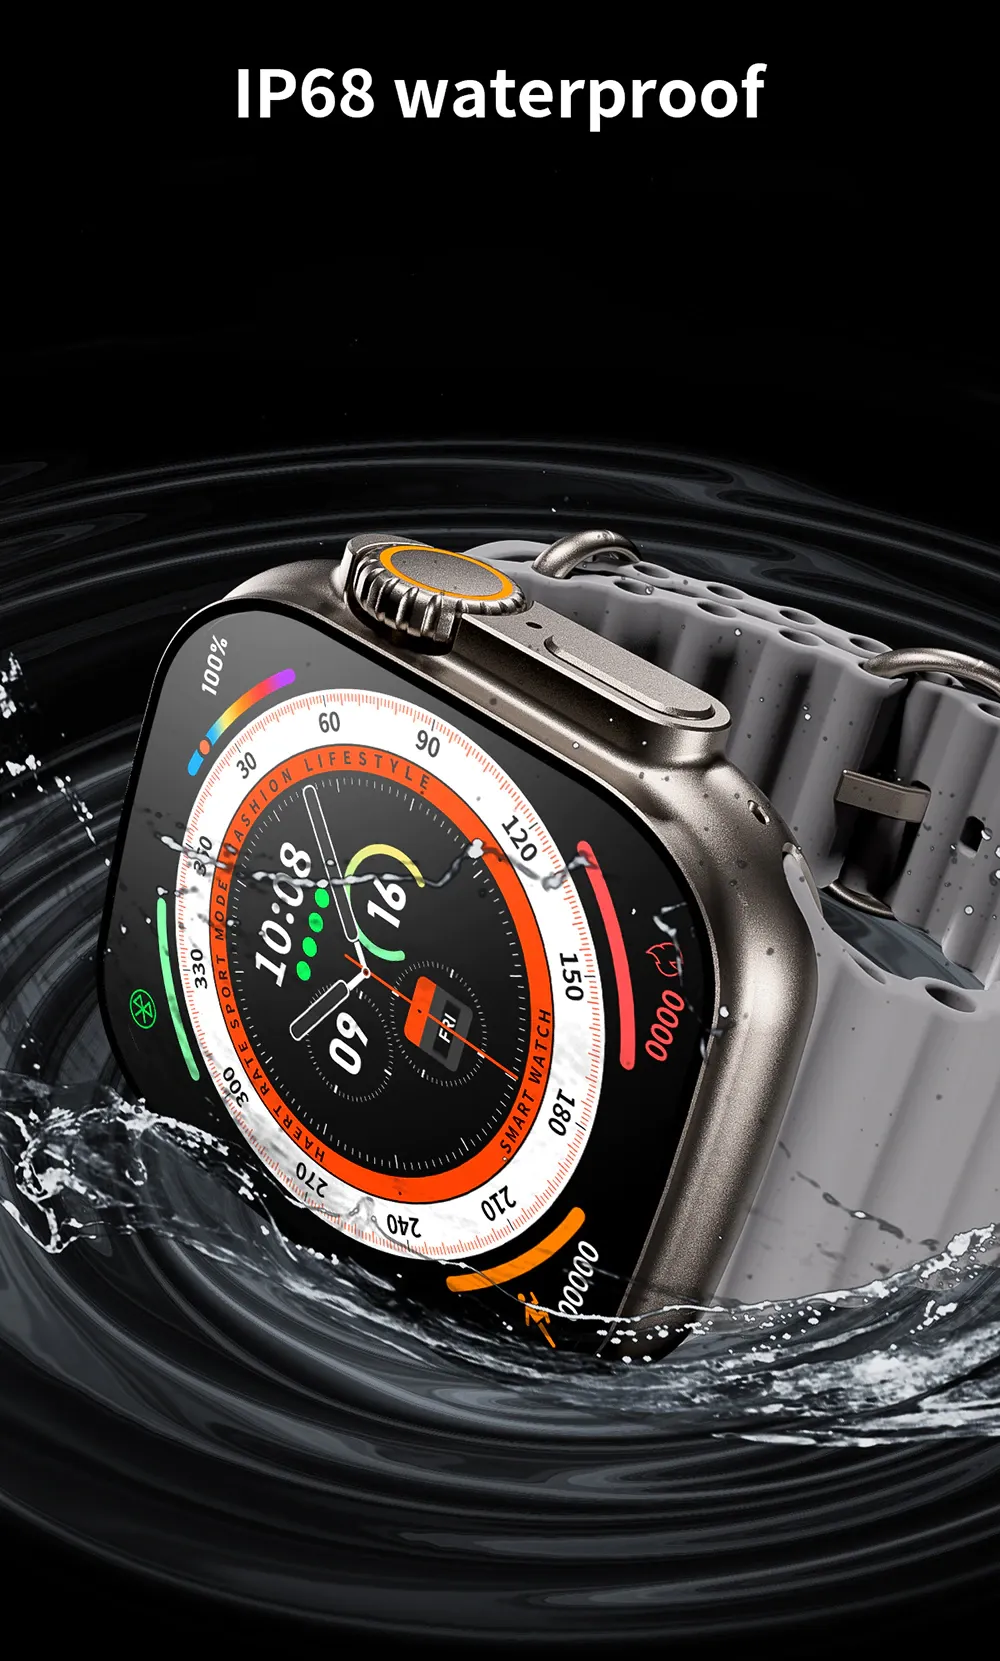 Buy X8 ultra smart watch at best price in Pakistan | Rhizmall.pk